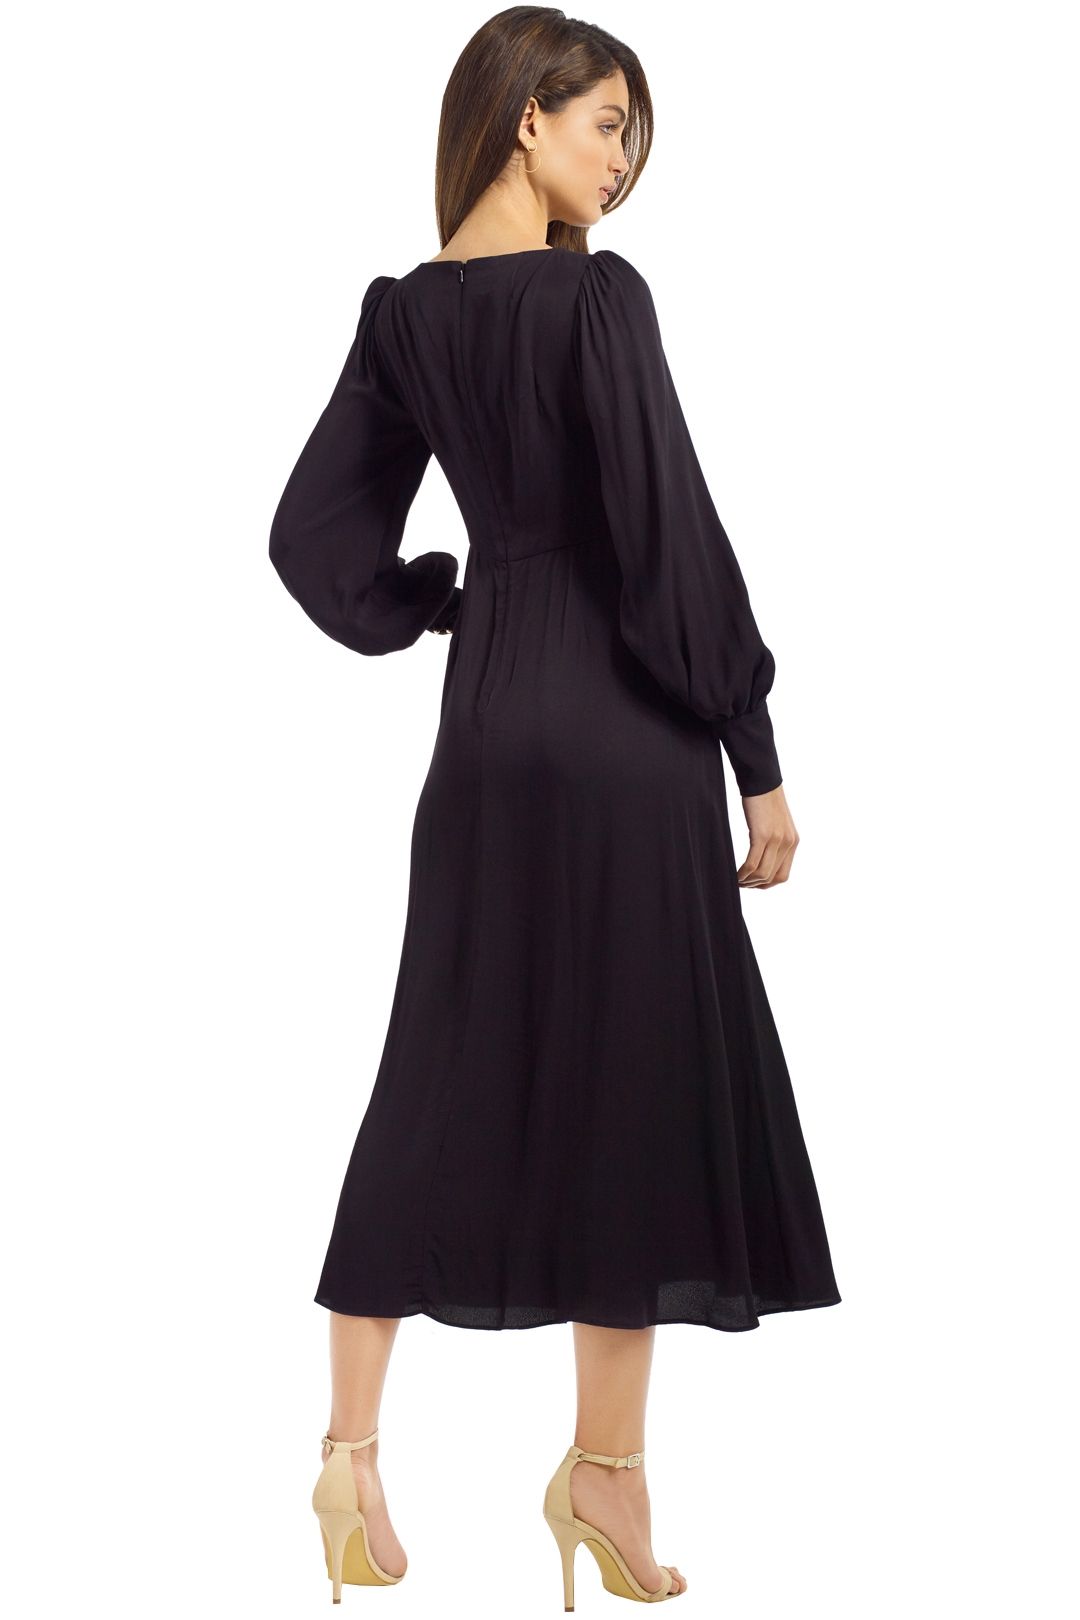 Zimmermann - Rouche Dress - Black - Back